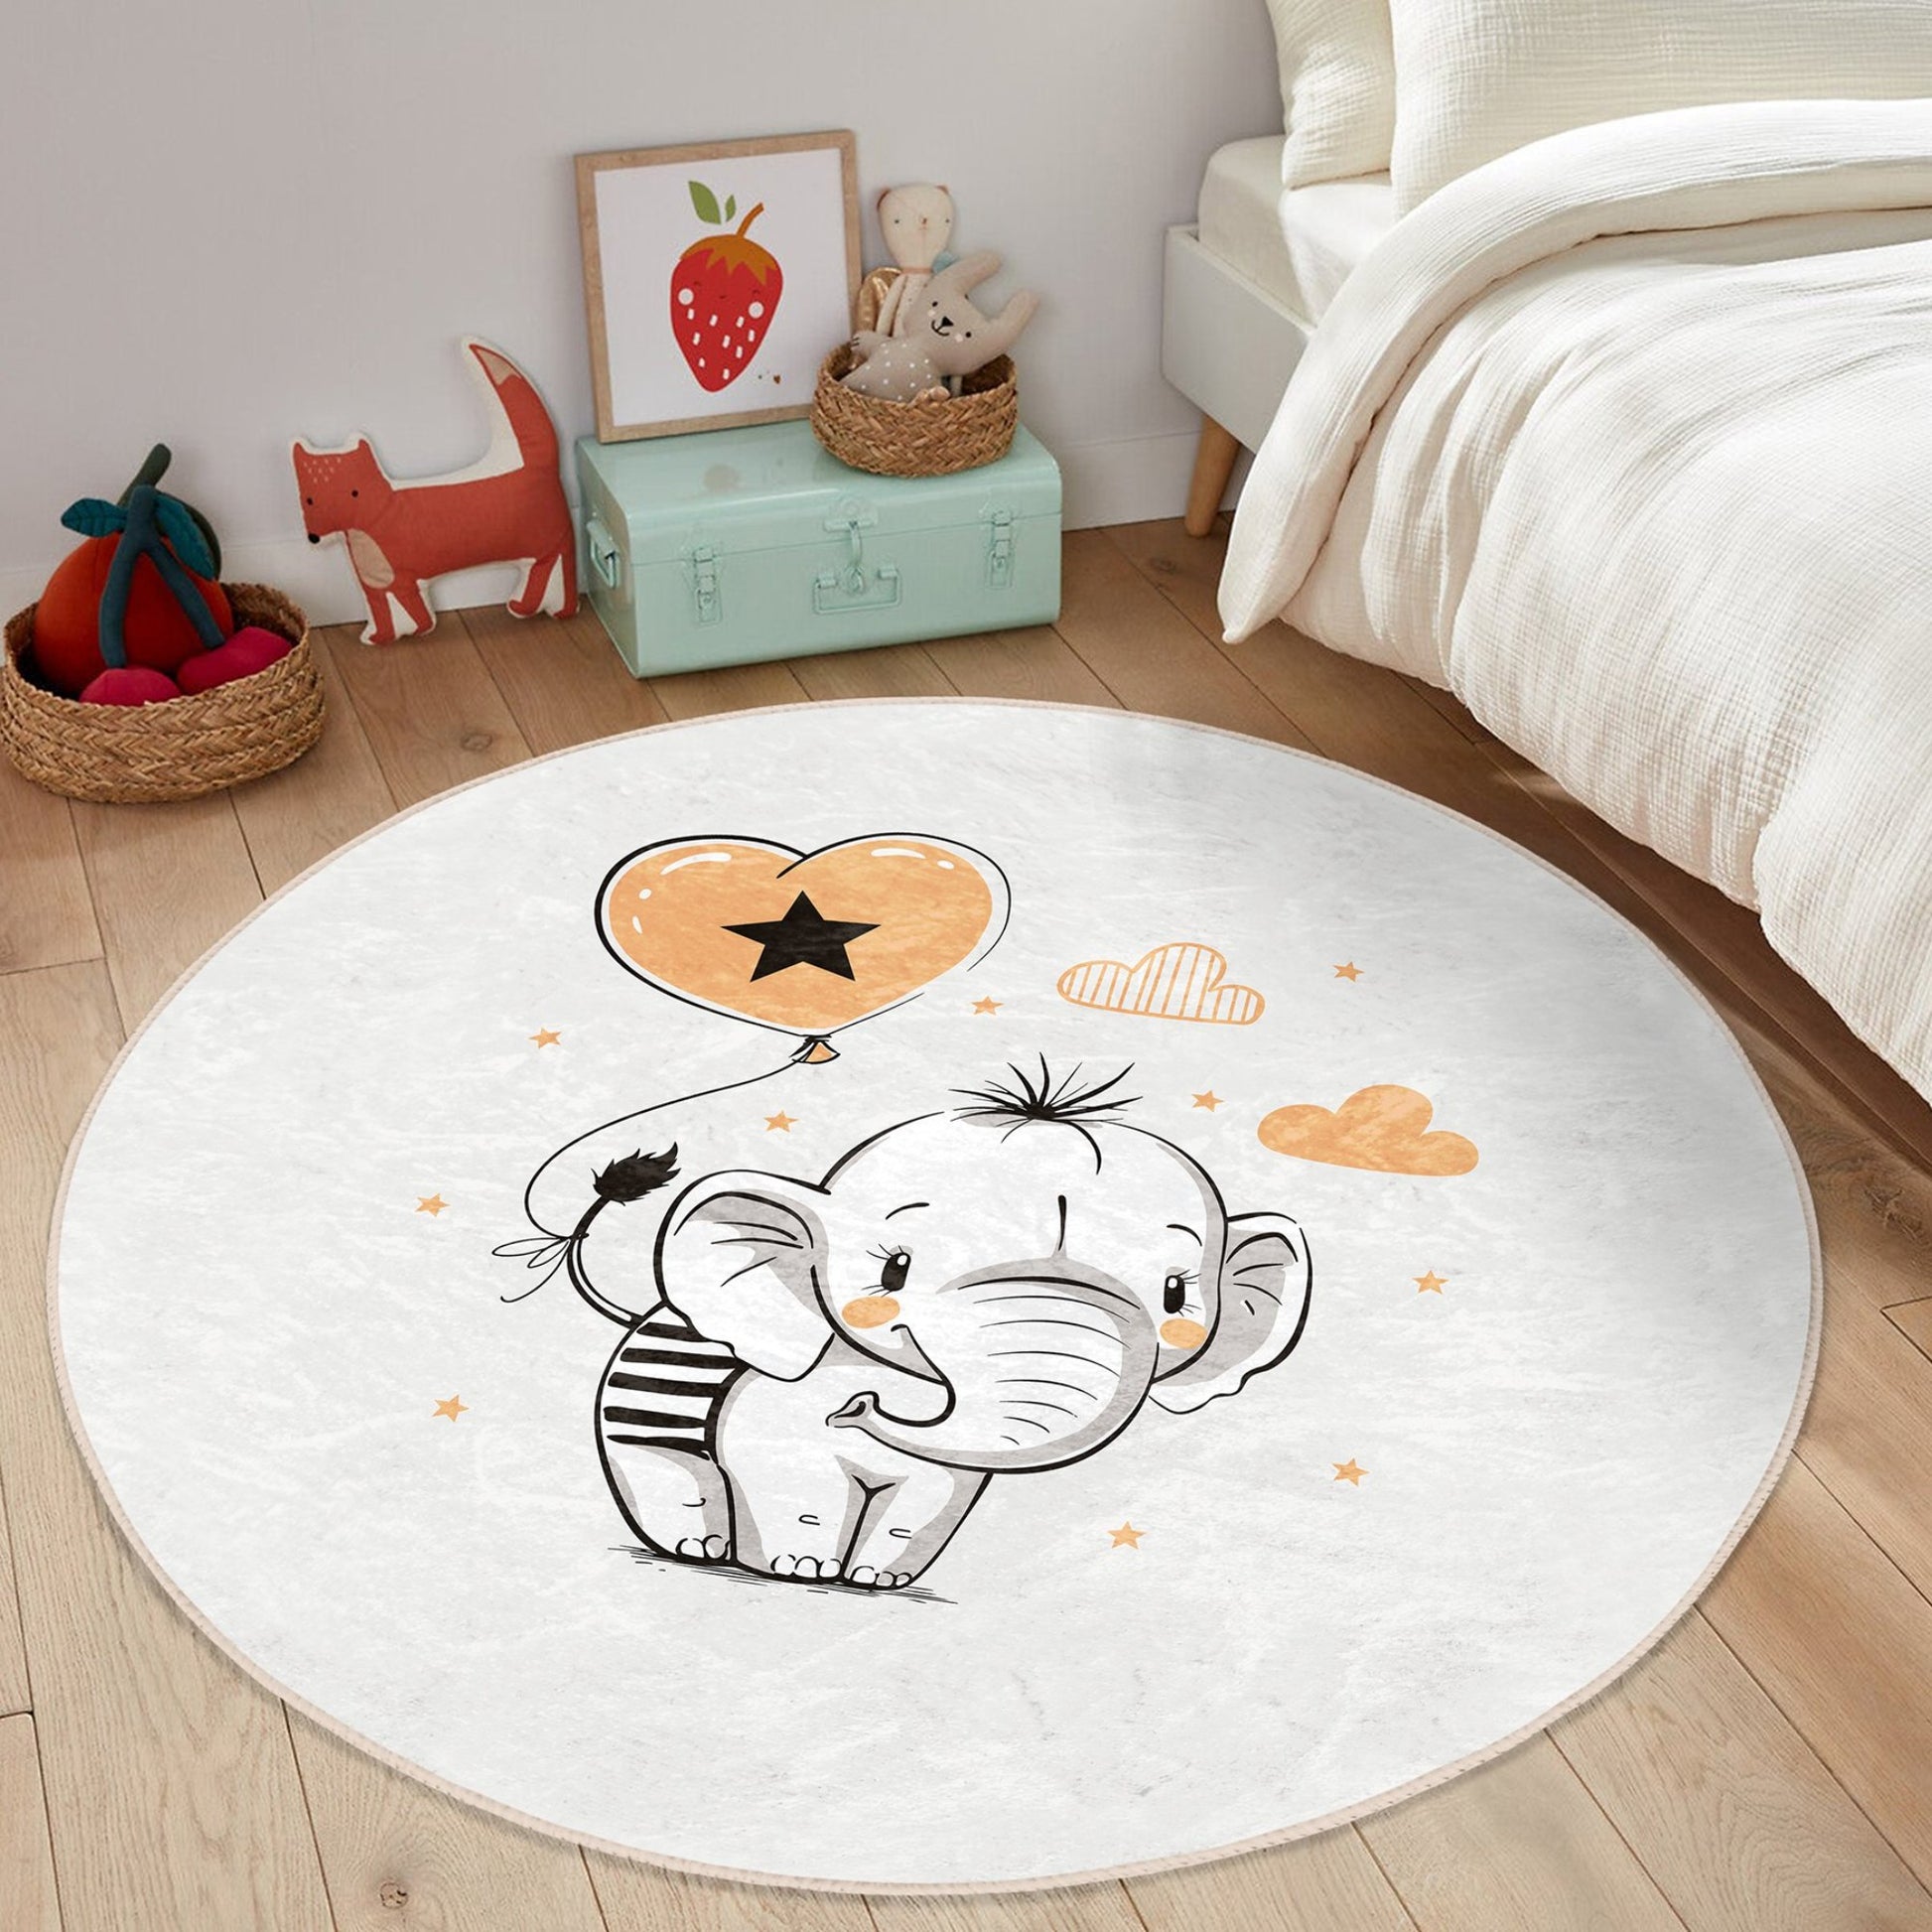 Rug with Sweet Baby Elephant Illustration